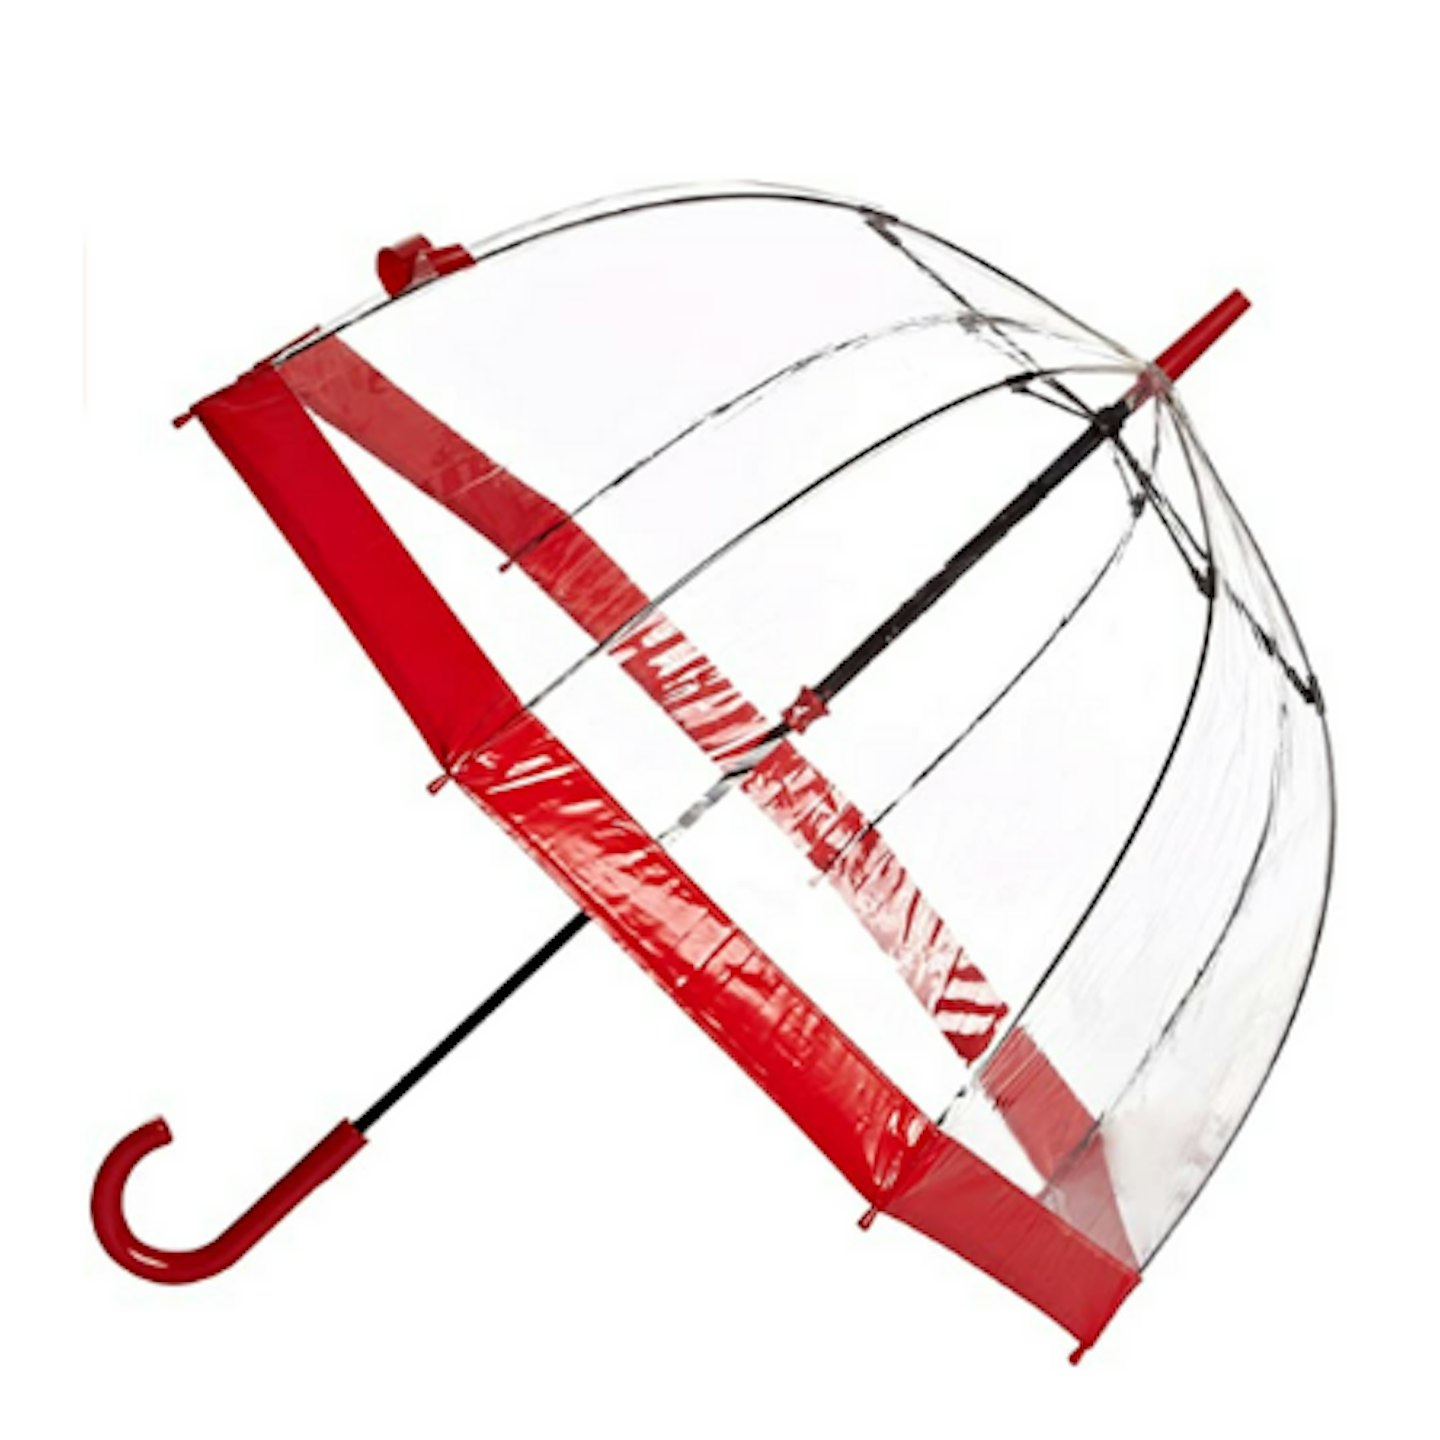 Fulton Birdcage-1 Umbrella